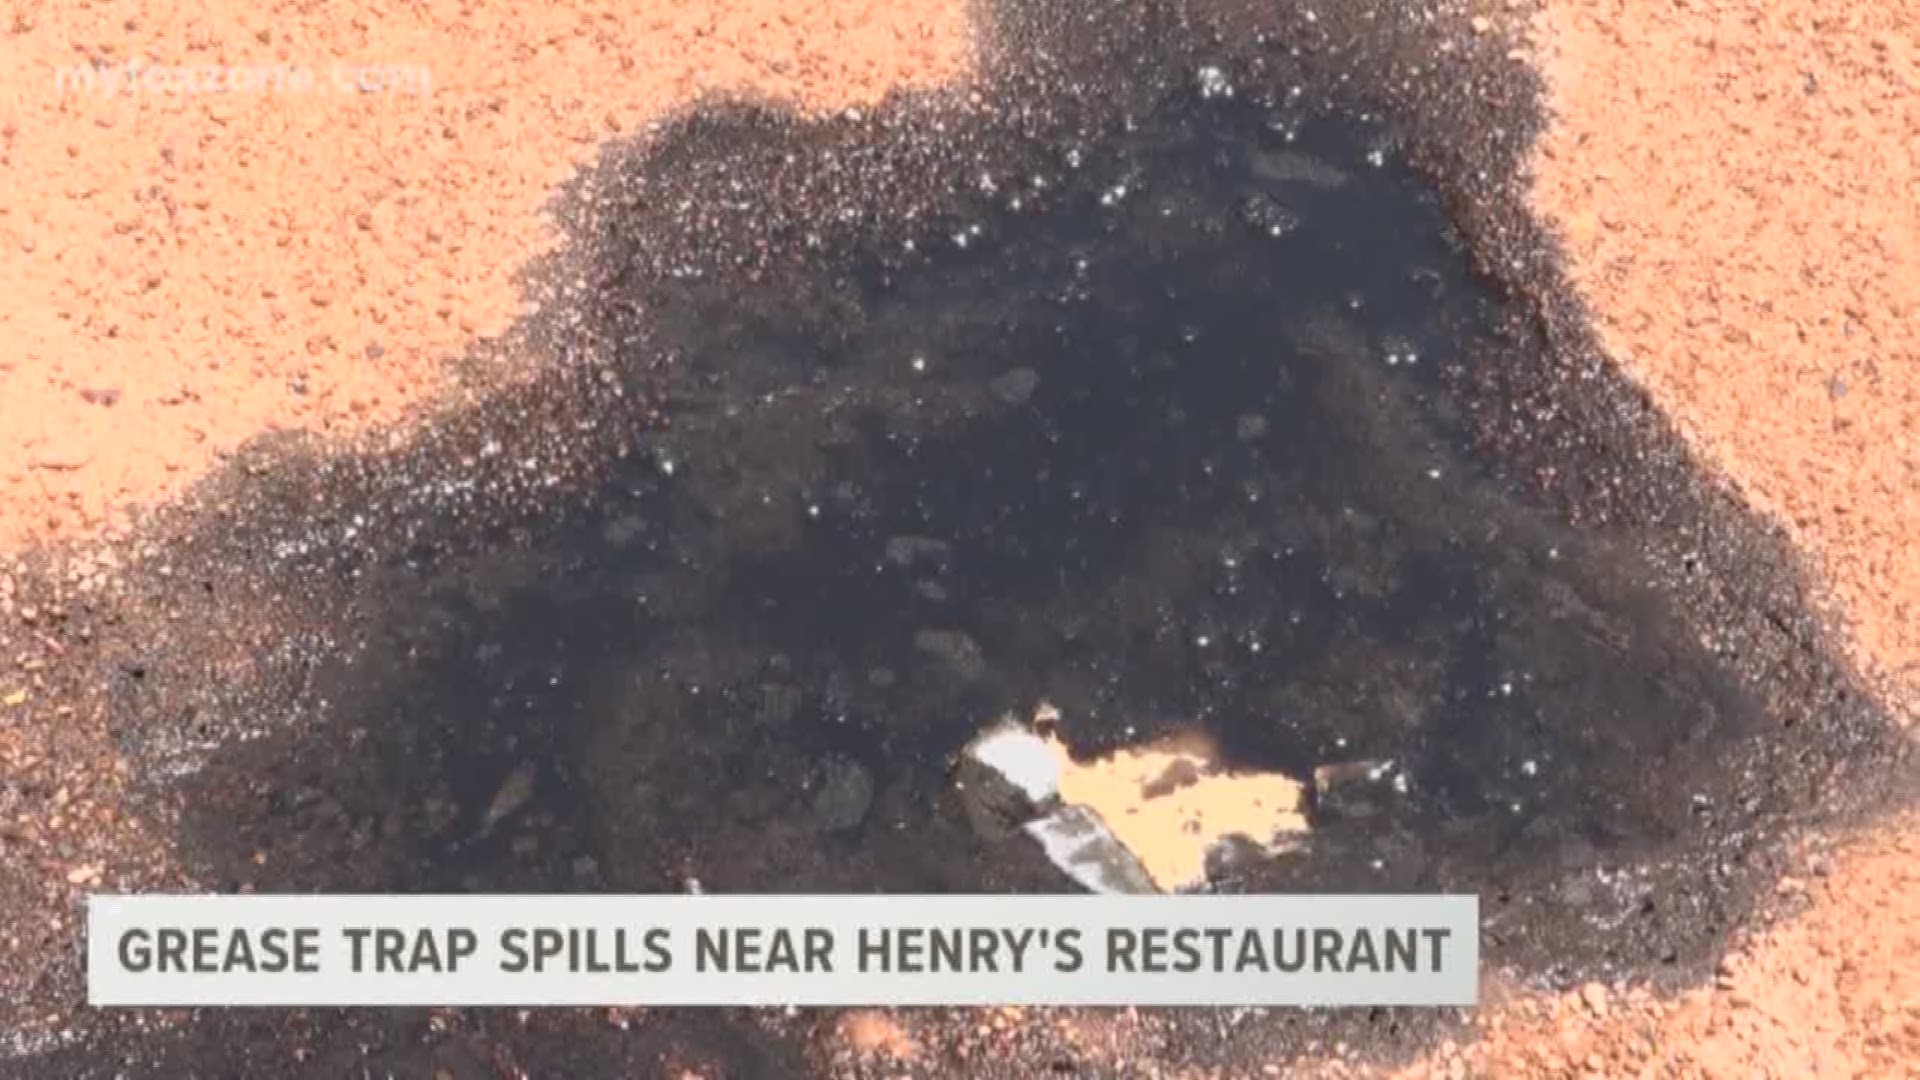 Grease trap spills near Henry's restaurant.